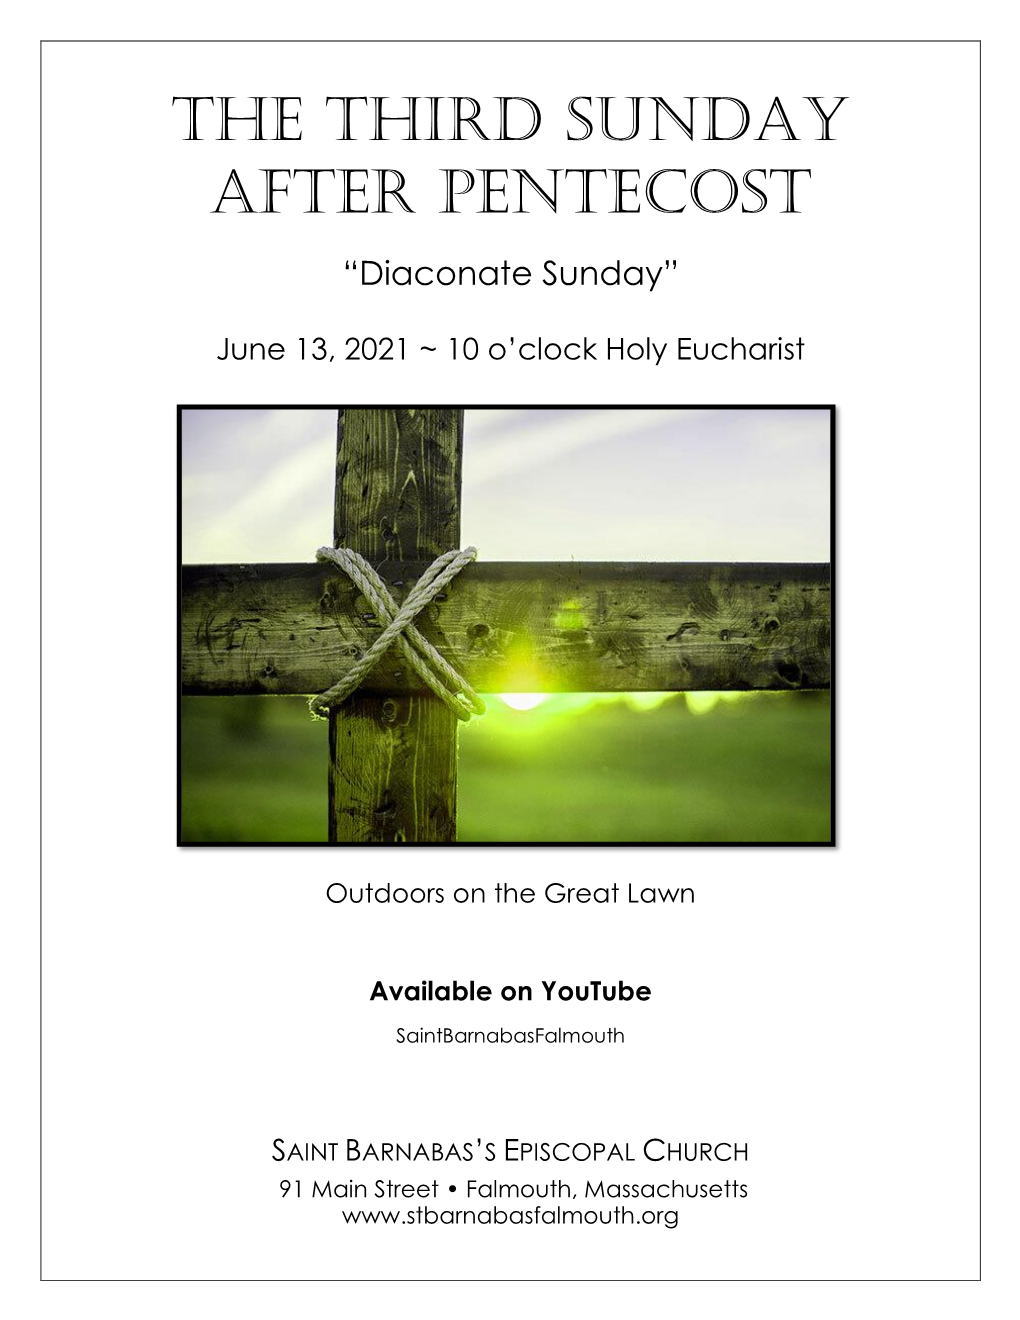 The Third Sunday After Pentecost